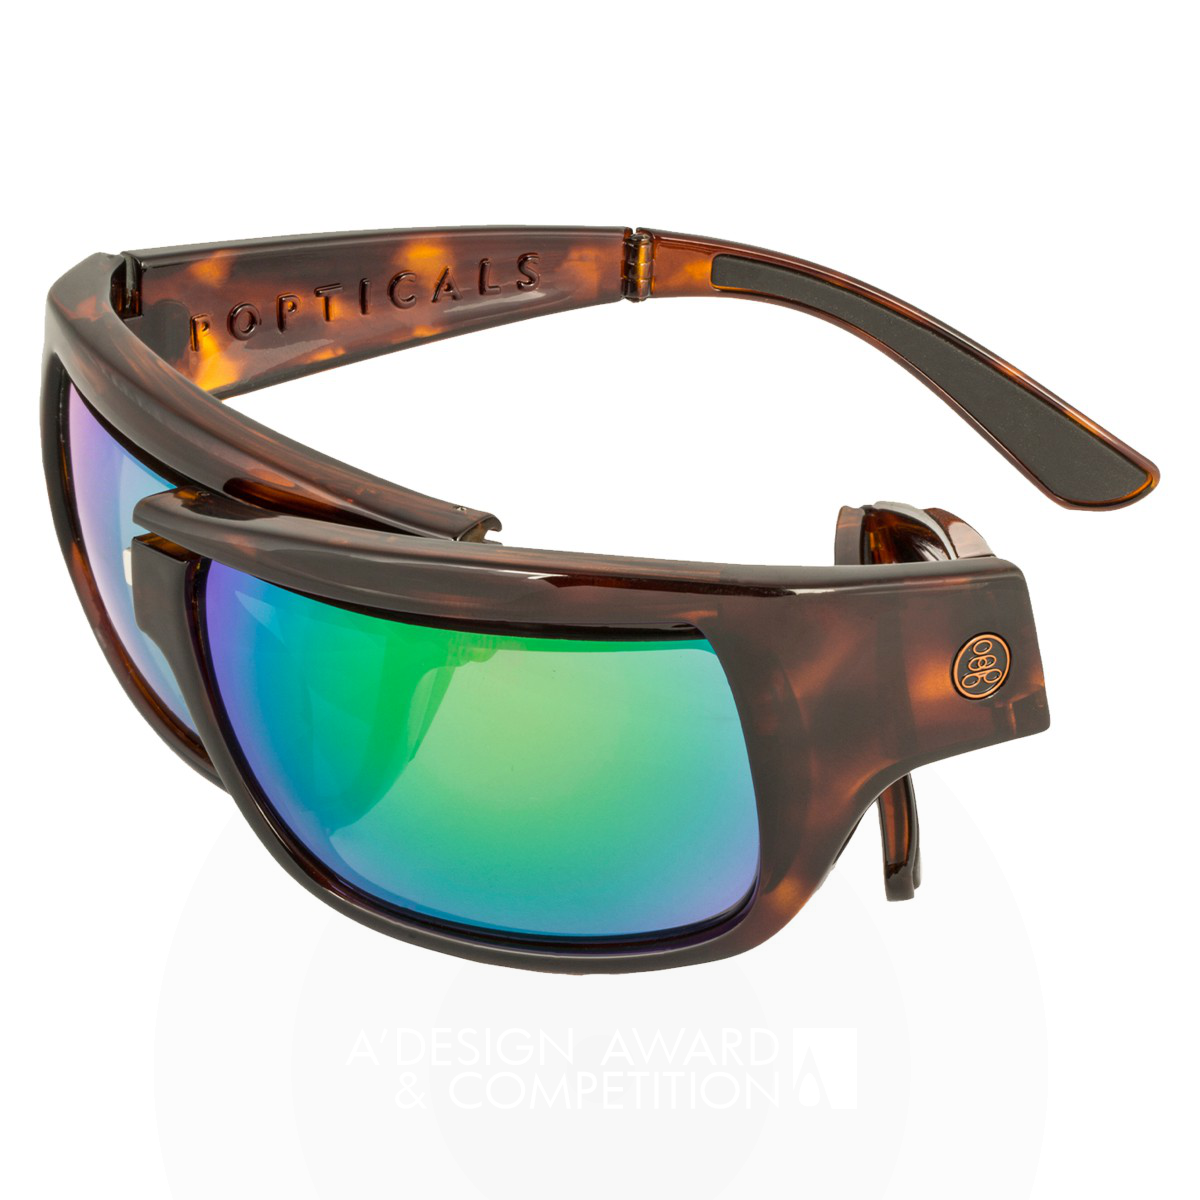 Popticals Sunglasses by Popticals DK Largo Corporation